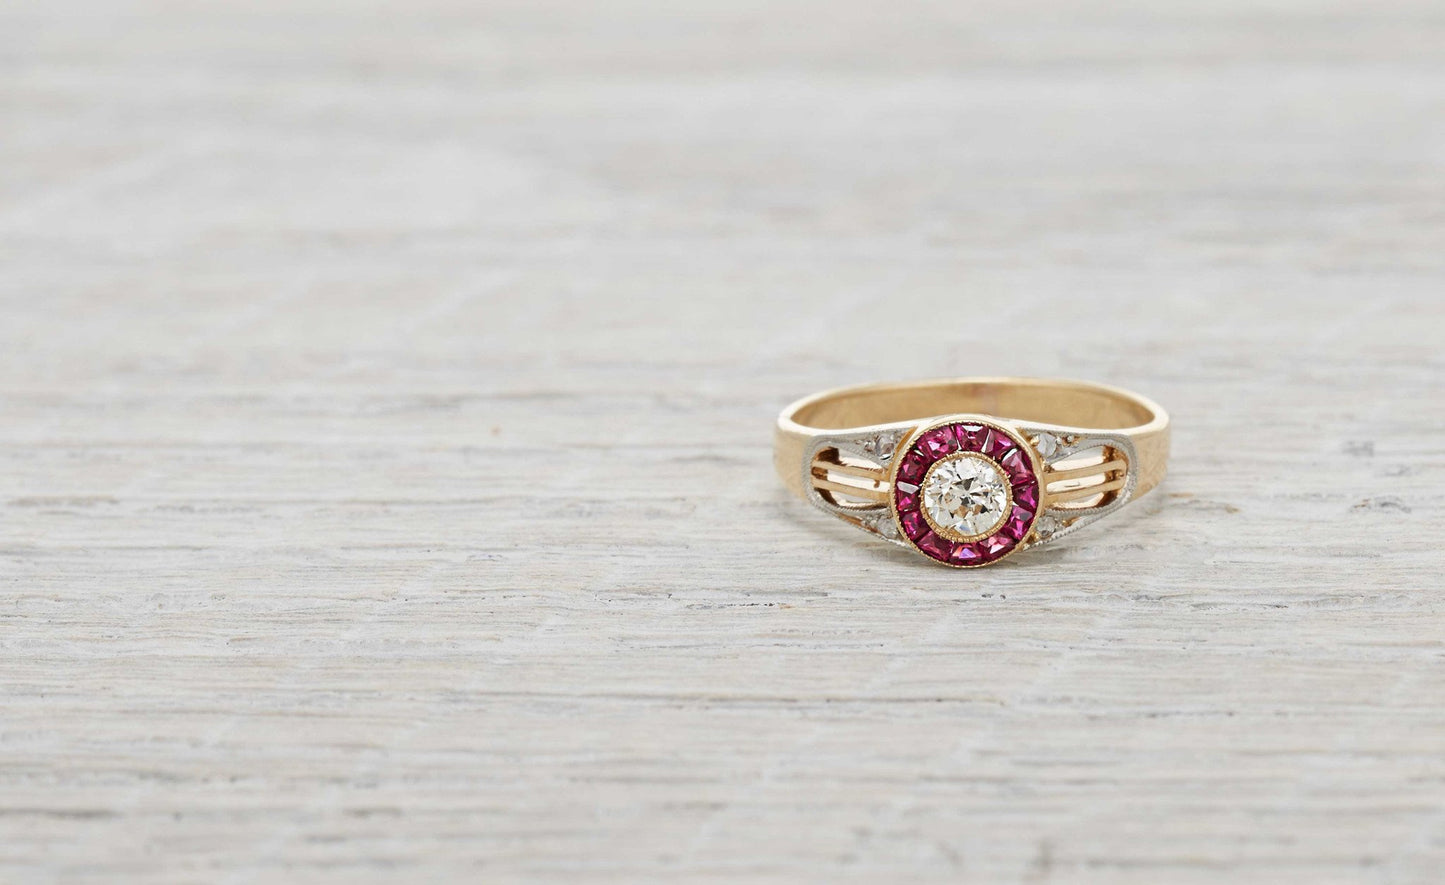 .30 Carat Edwardian Diamond & Ruby Engagement Ring